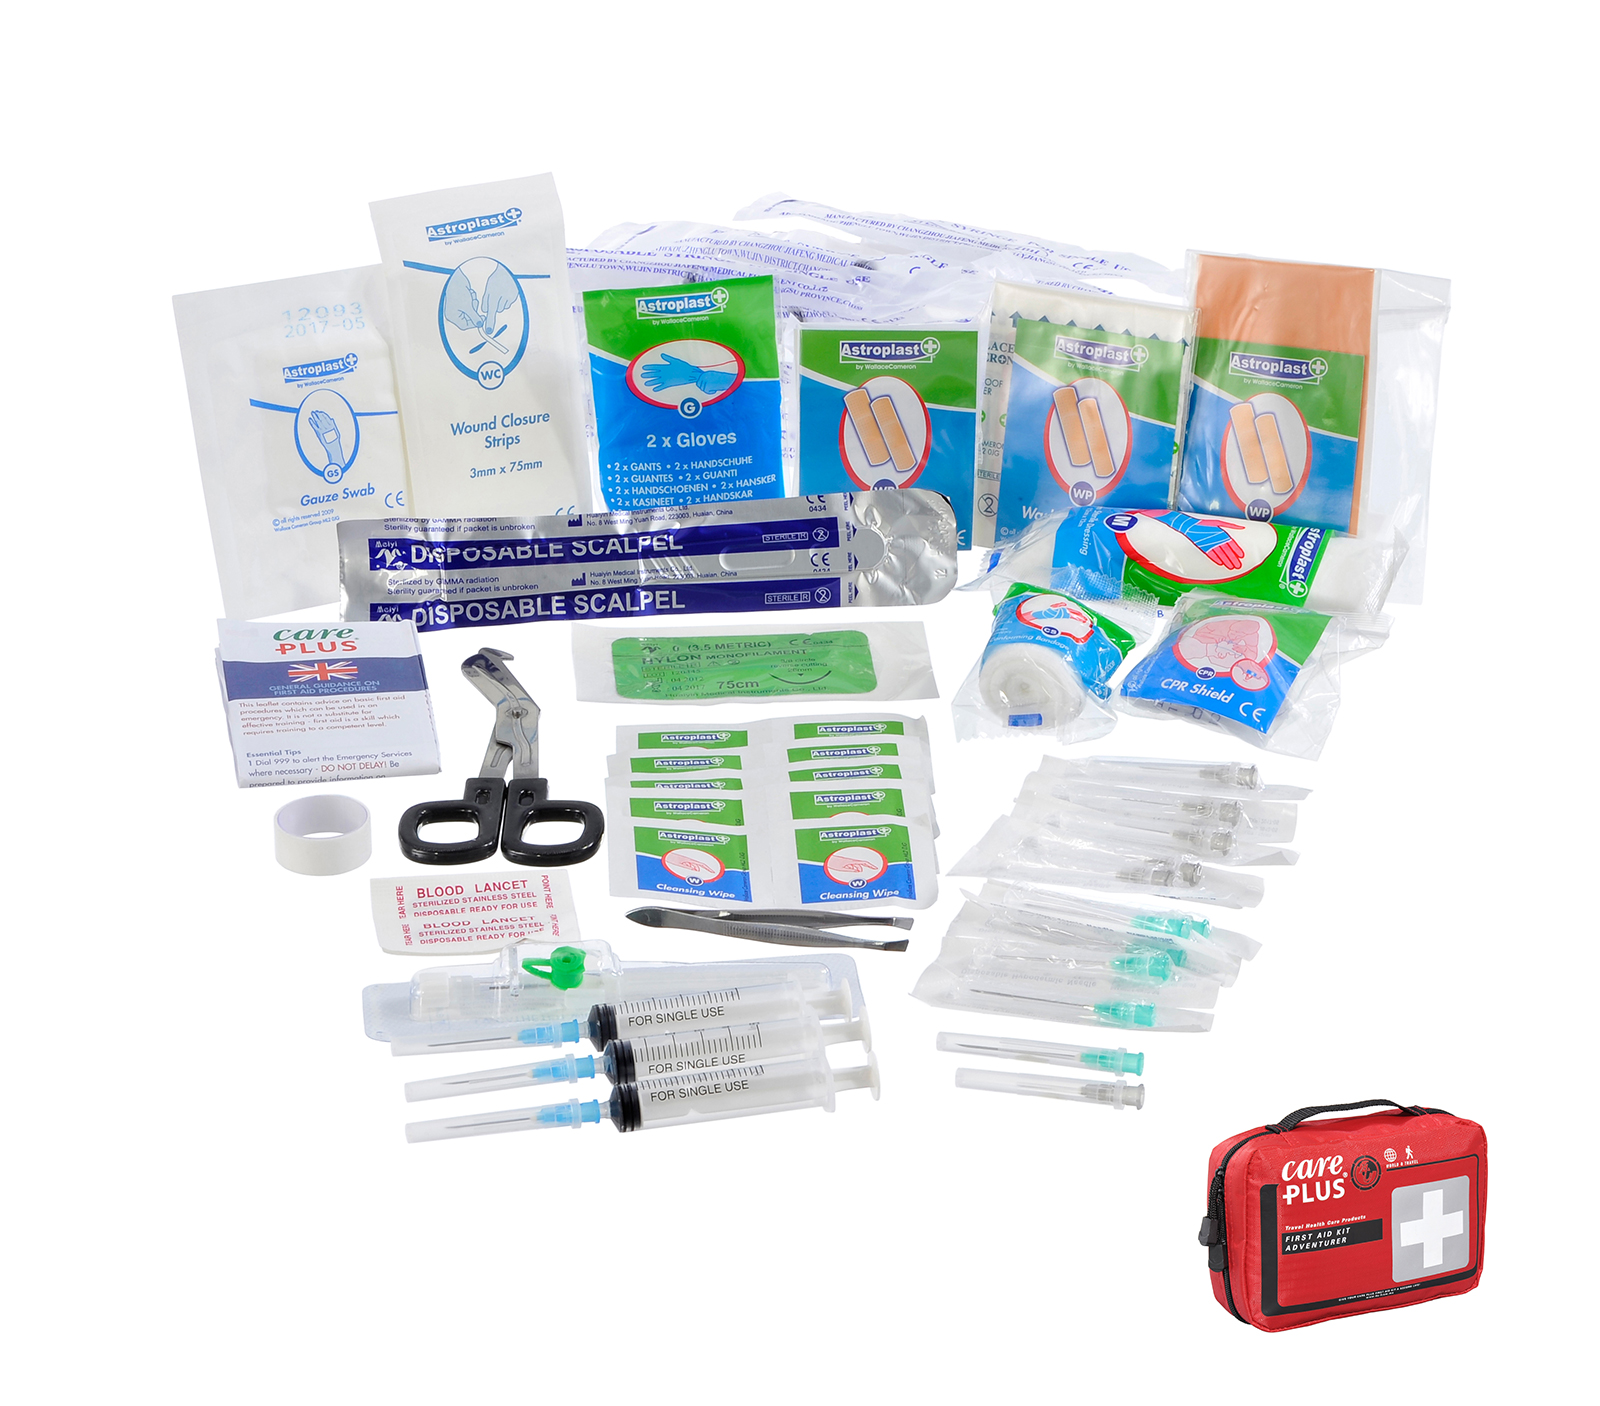 Care Plus First Aid Kit Adventurer